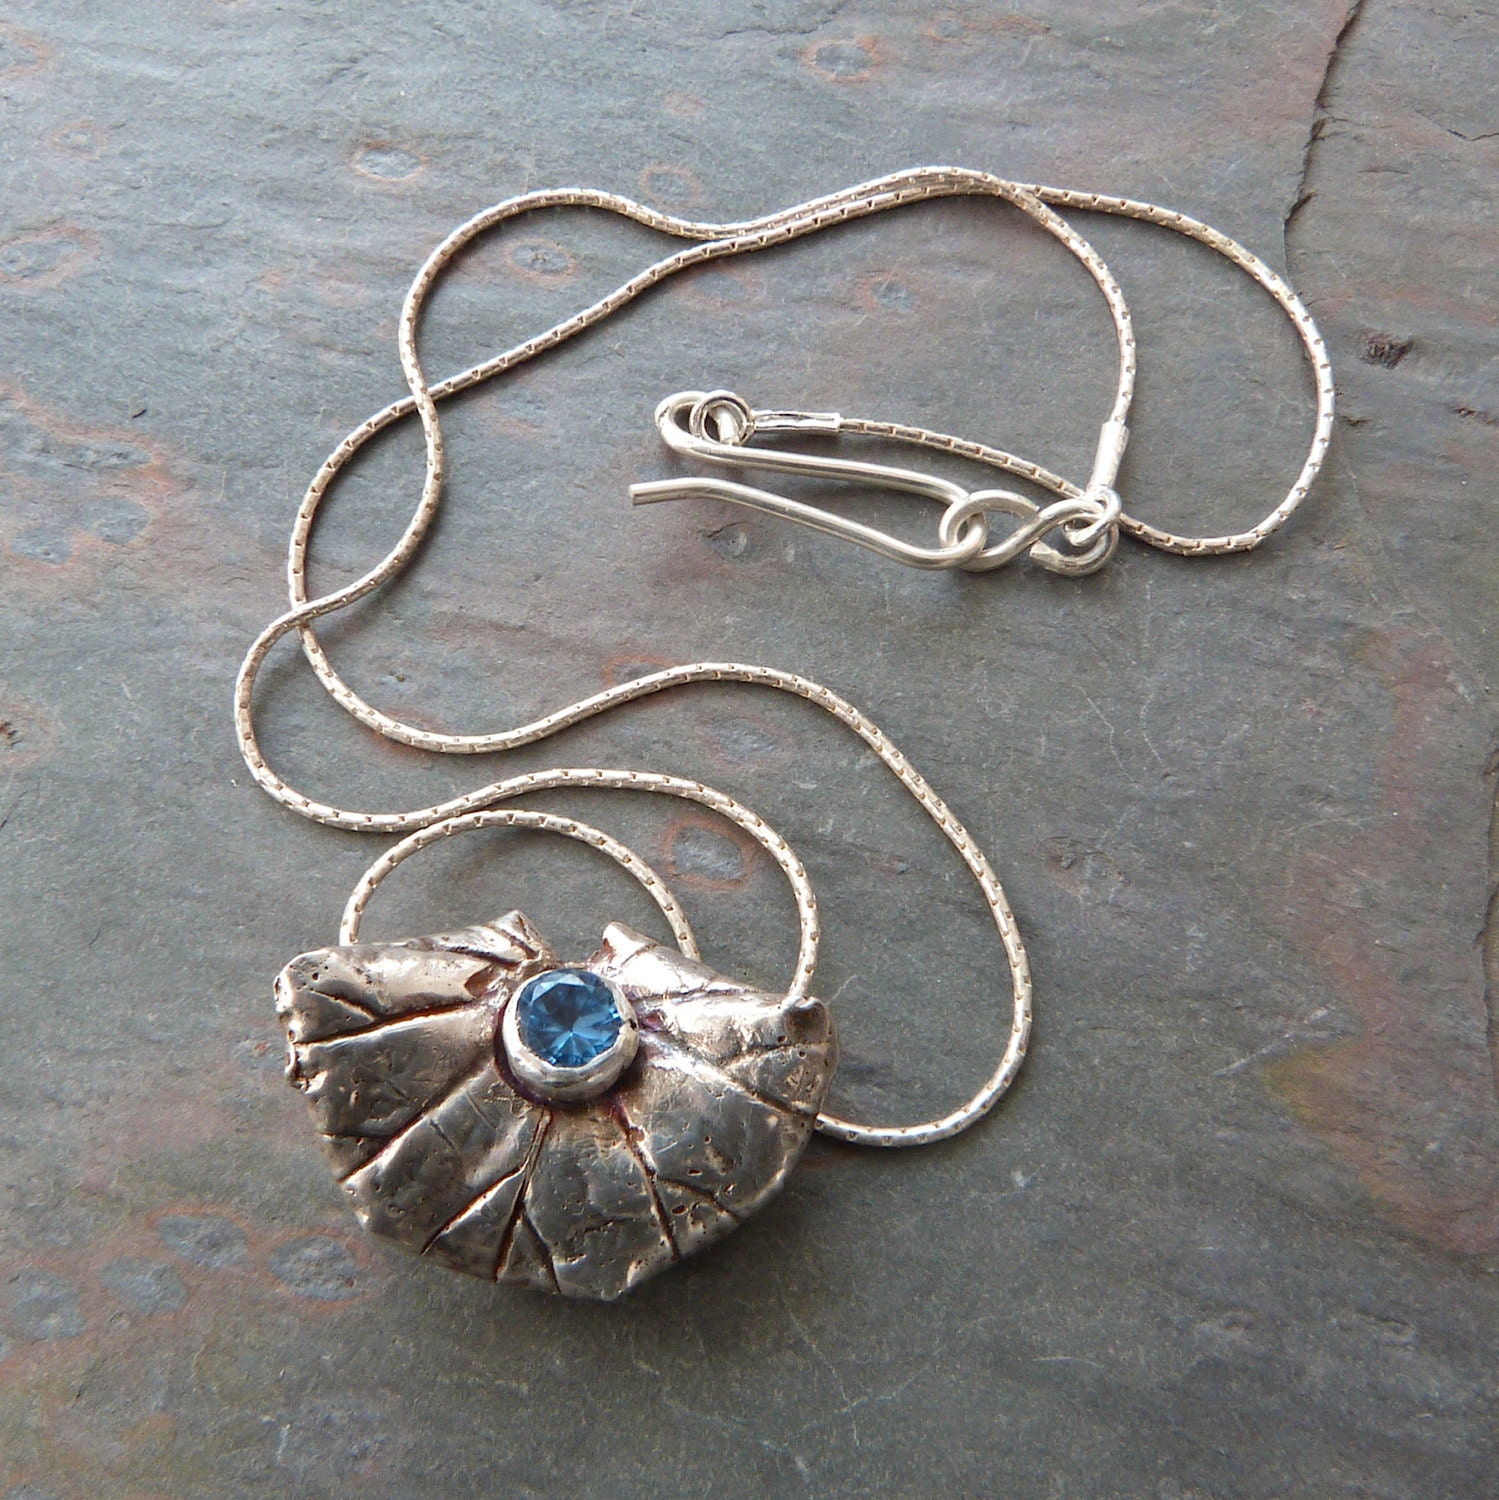 Fine Silver Leaf Pendant Necklace with Sky Blue Spinel Bezel Set Gemstone & Sterling Chain - TransfigurationsJlry